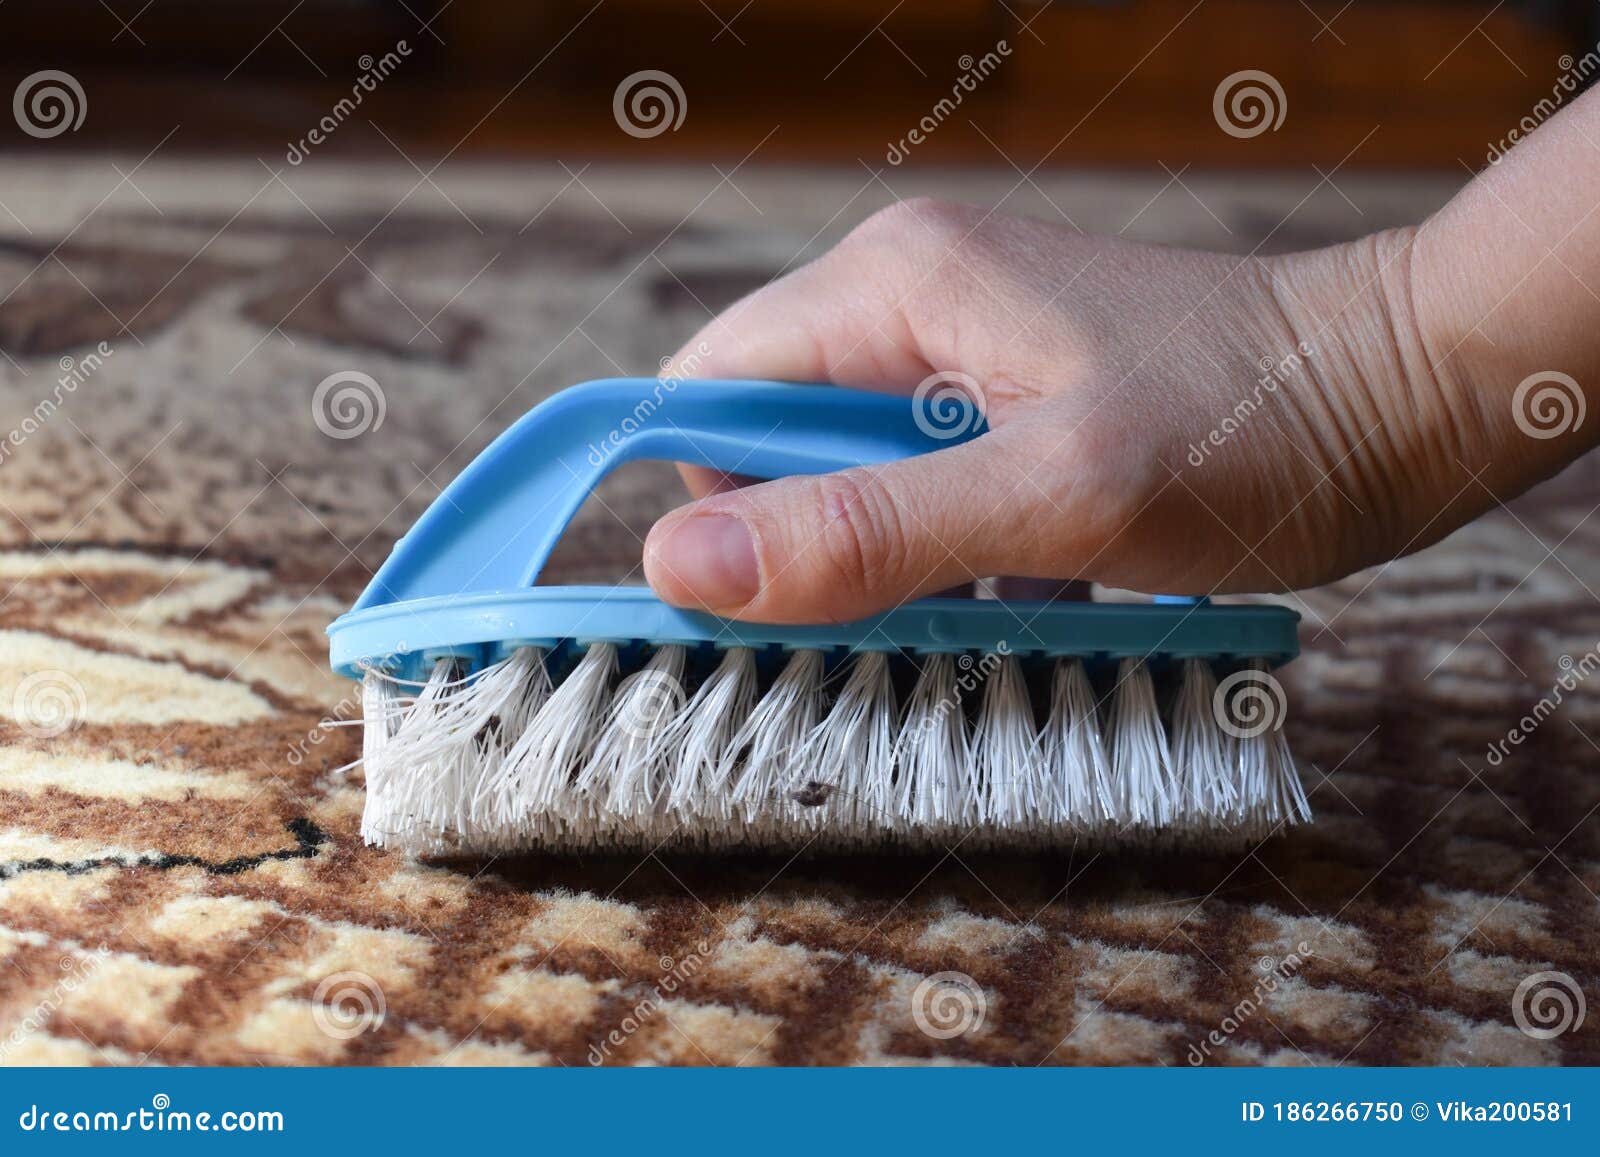 https://thumbs.dreamstime.com/z/hand-brush-floor-carpet-female-hand-cleans-rug-debris-cleaning-house-brush-woman-housewife-brushes-186266750.jpg